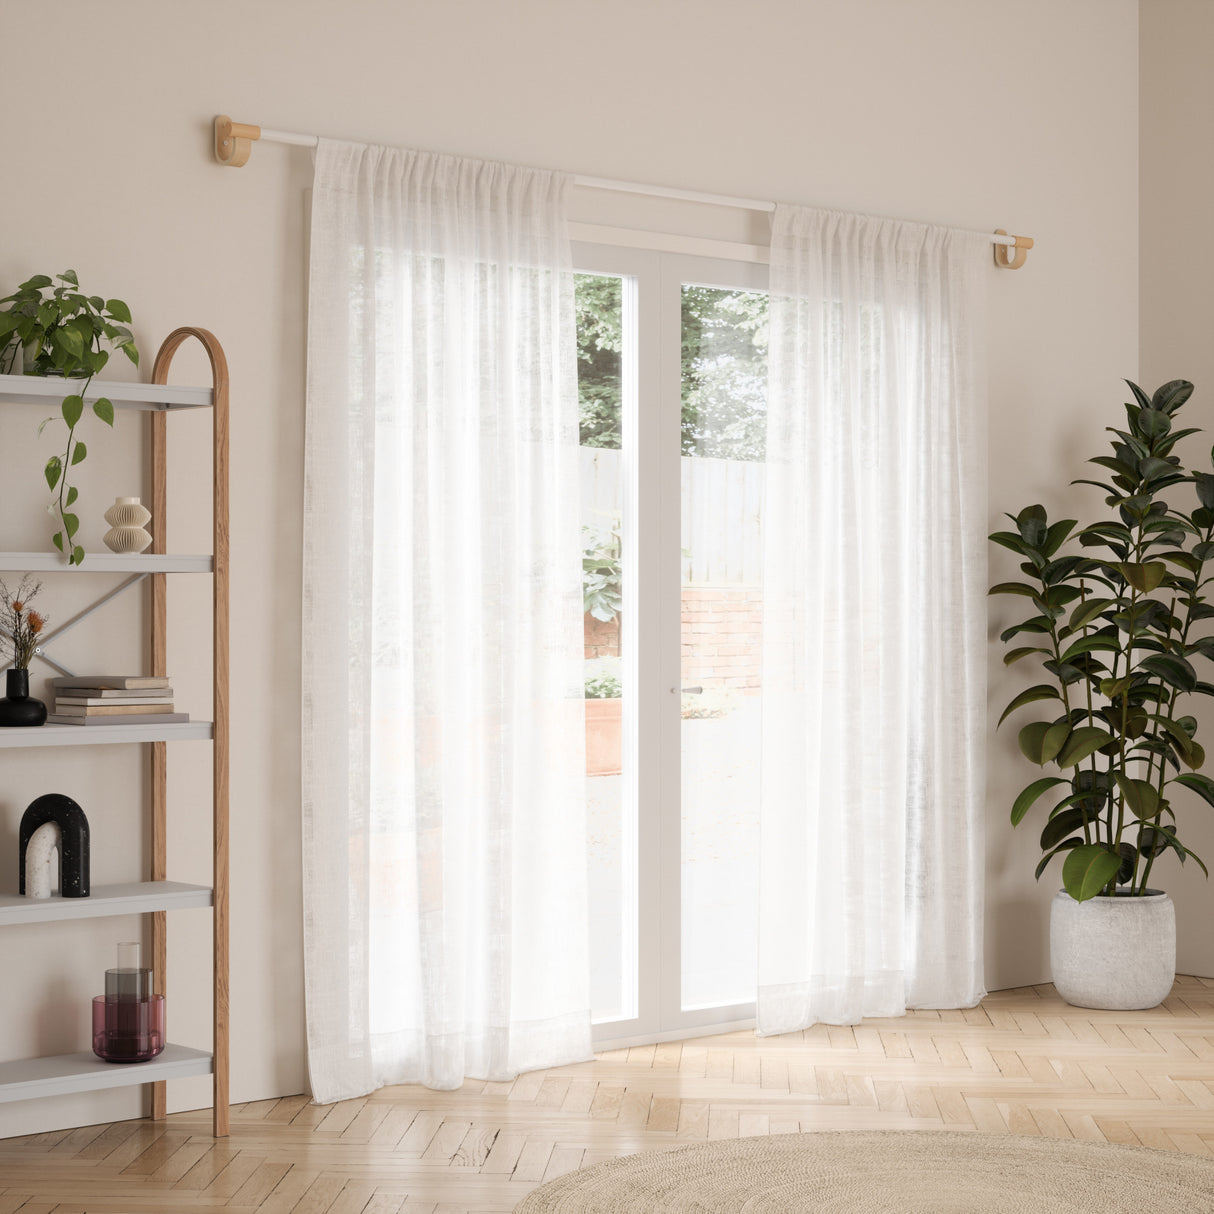 Single Curtain Rods | color: White-Natural | size: 42-120" (107-305 cm) | diameter: 1" (2.5 cm)